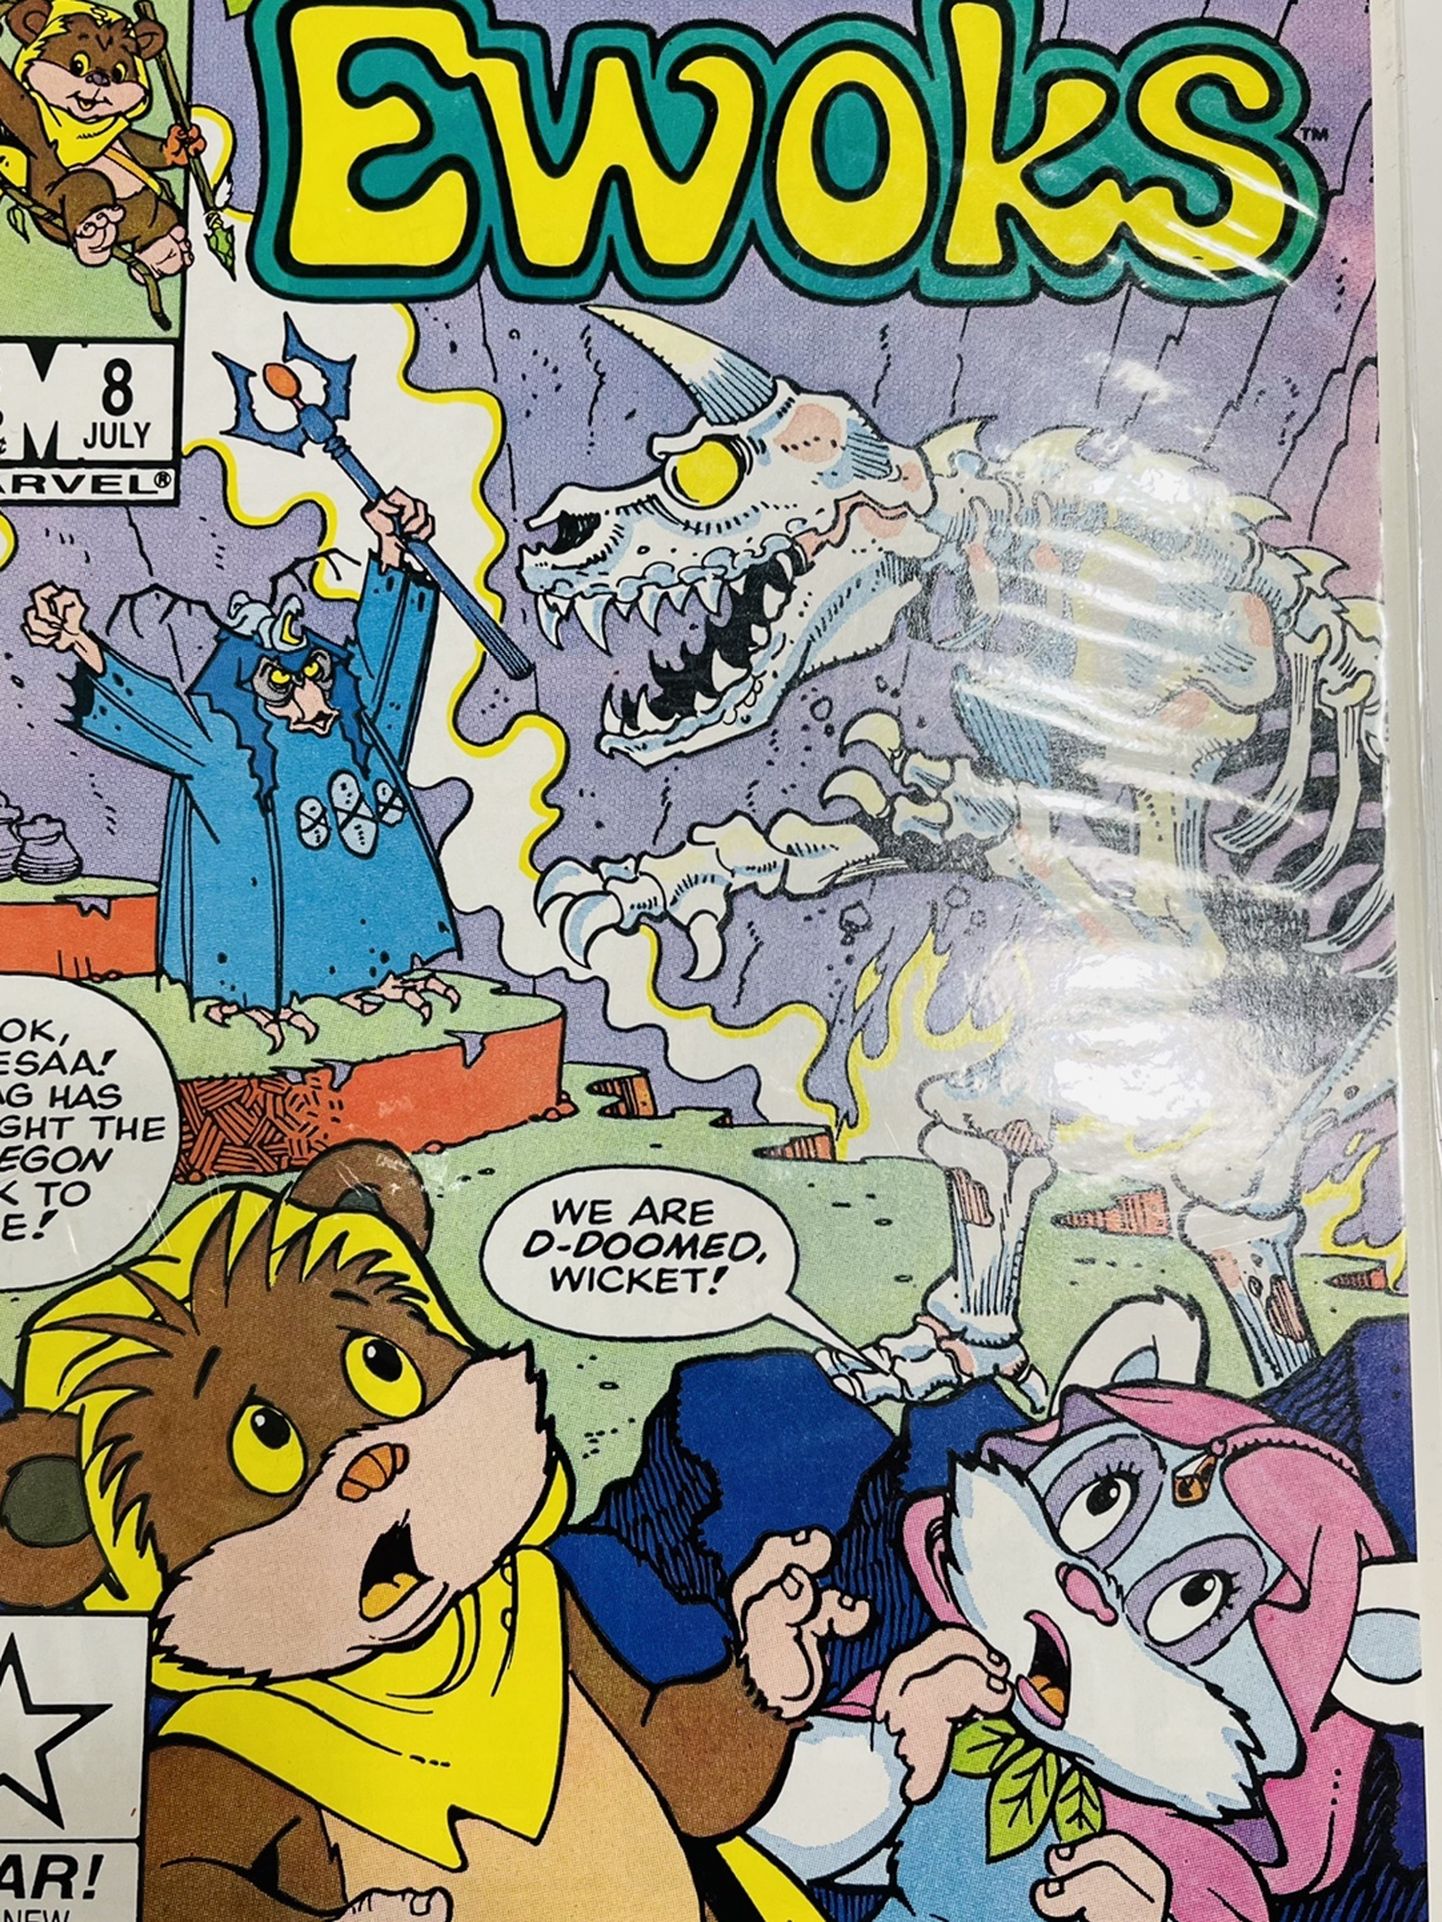 Star Comics Marvel EWOKS #8 Comic Book The Kreegon Beast Rises Again 1985